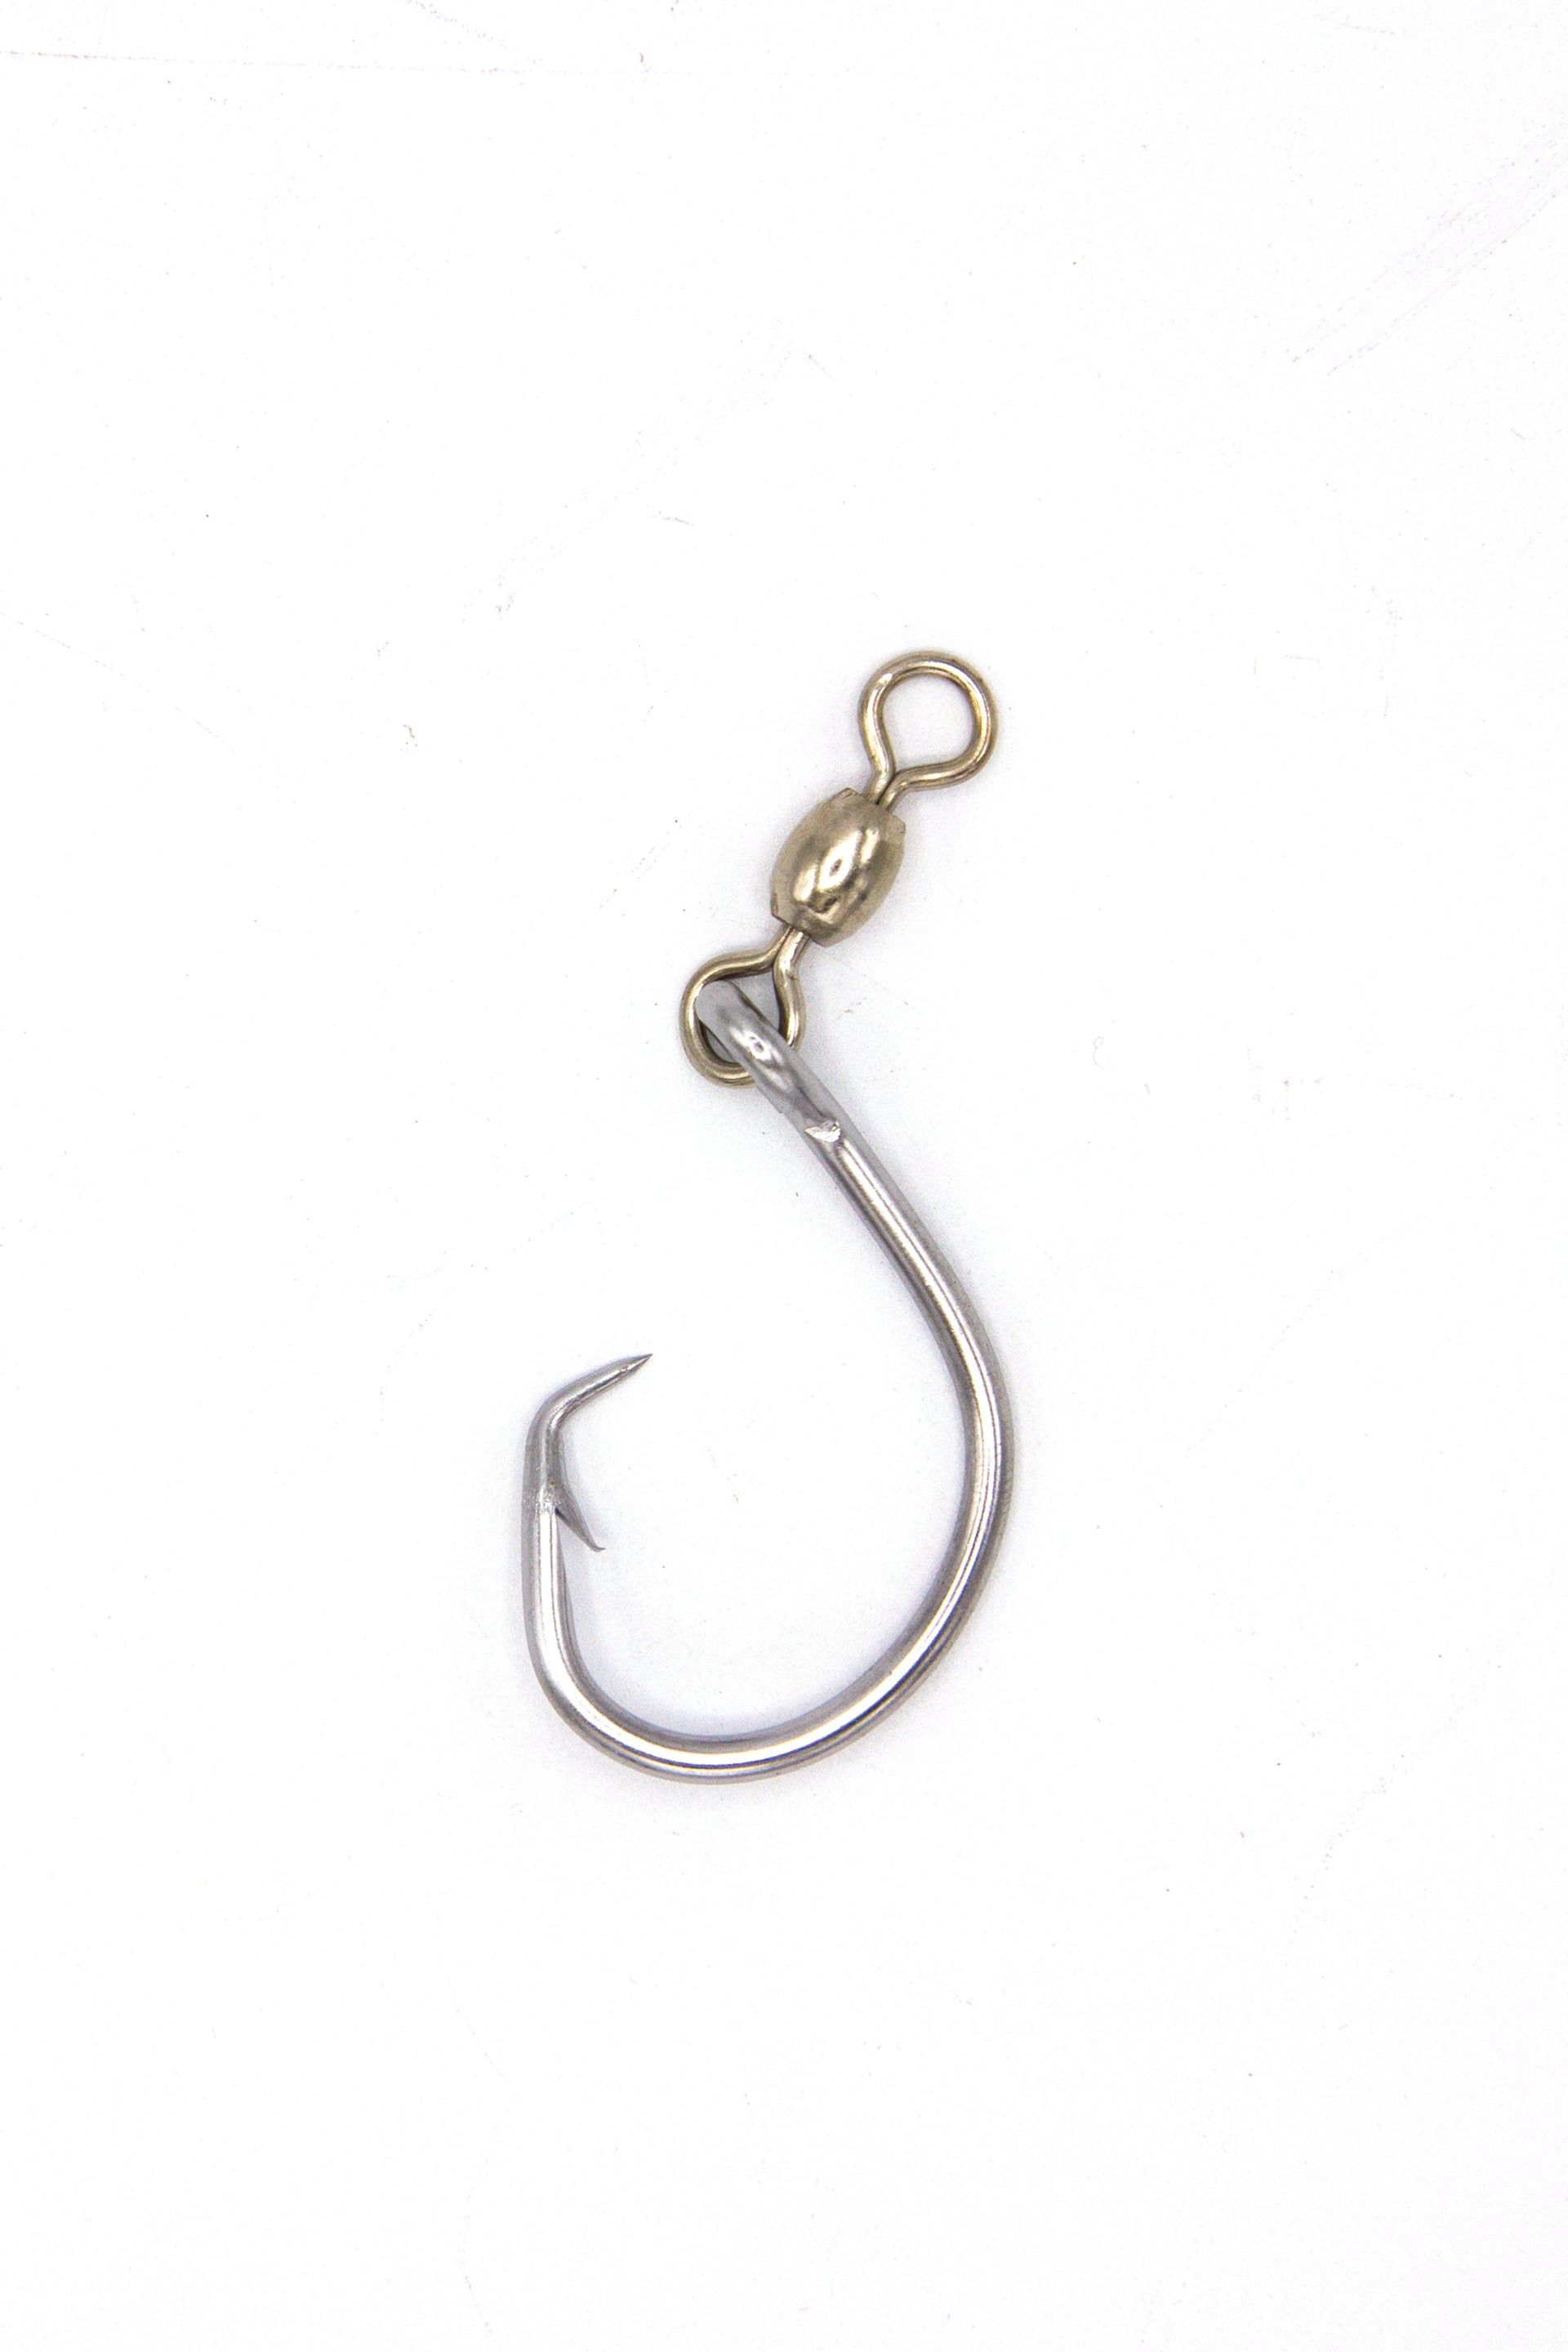 Unclesport 50 Pieces SpinShot Drop Shot Hook Swivel Fishing Hooks High  Carbon Steel Fishhook Worm Hook for Feeder Carp Bass Perch Catfish, Hooks -   Canada